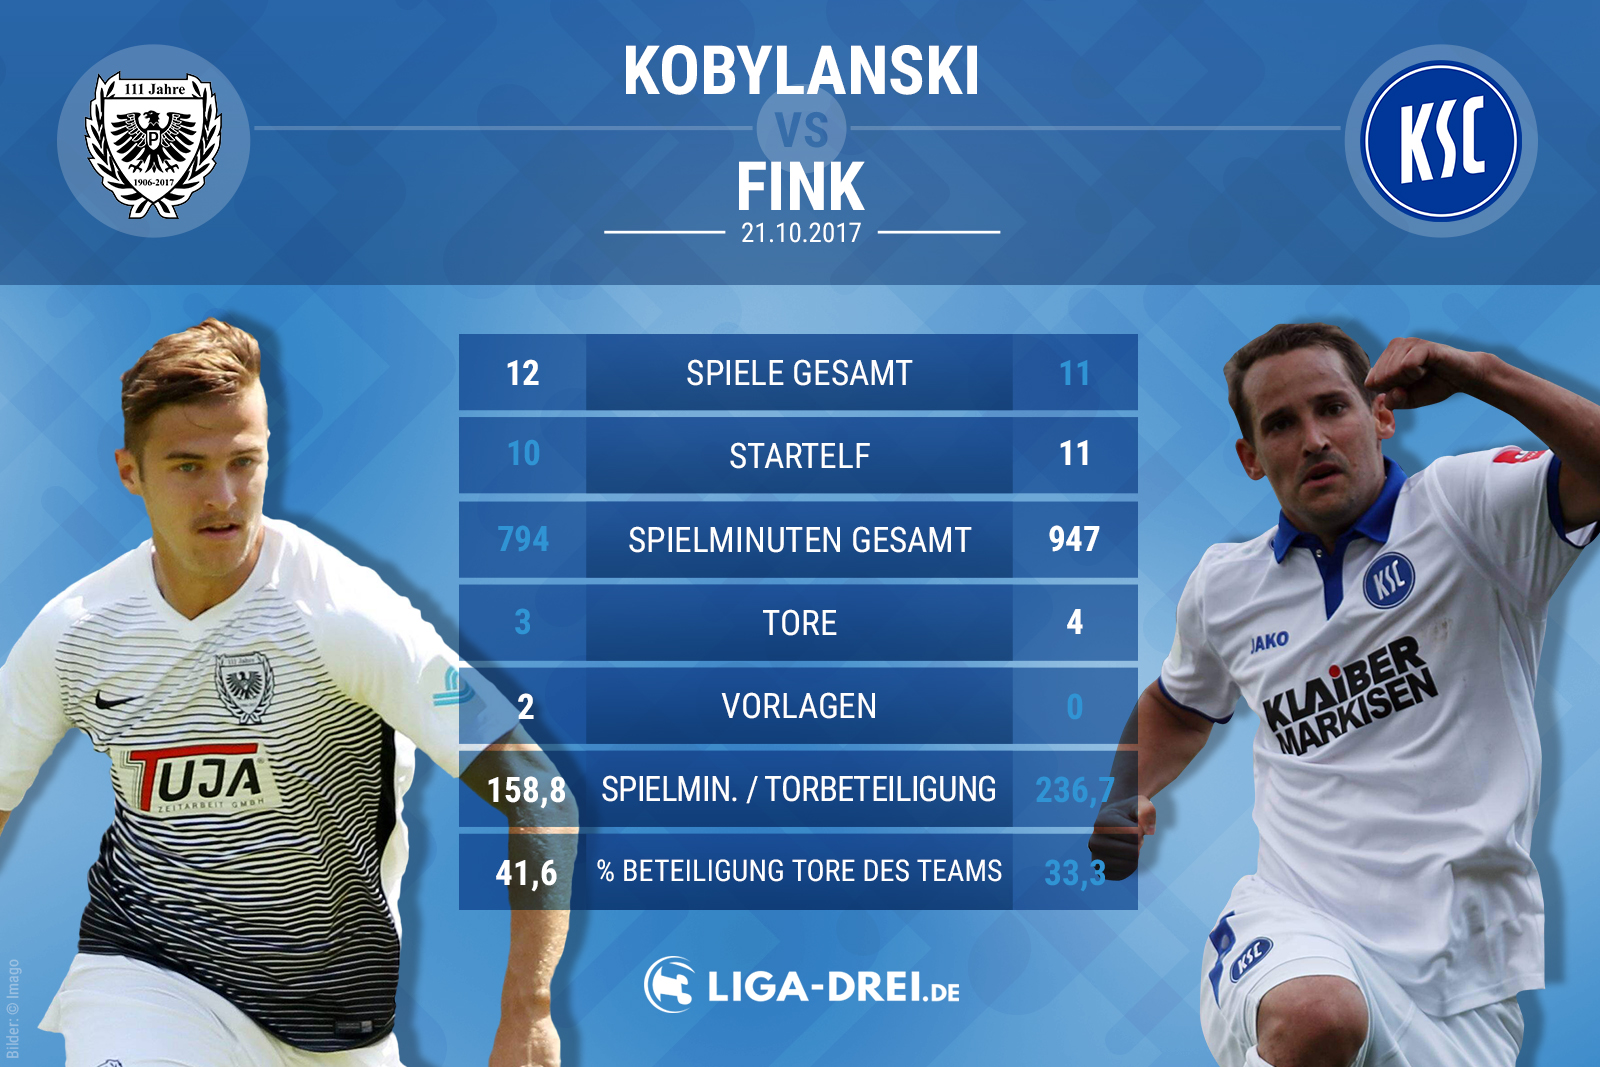 Spielervergleich Kobylanski vs Fink